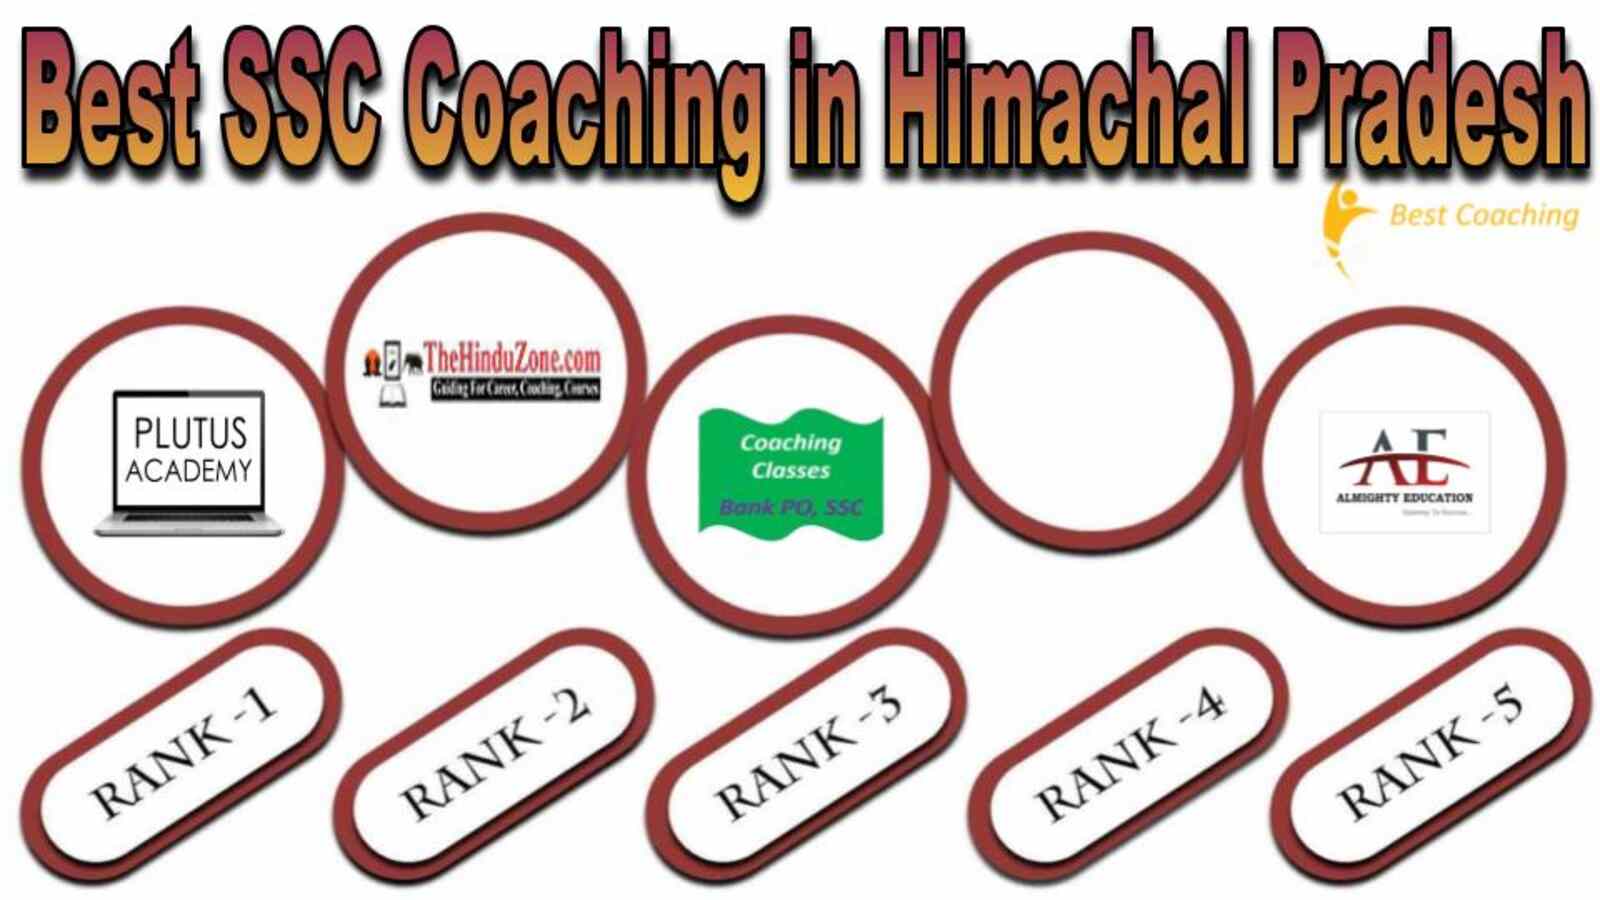 Best SSC coaching in Himachal Pradesh